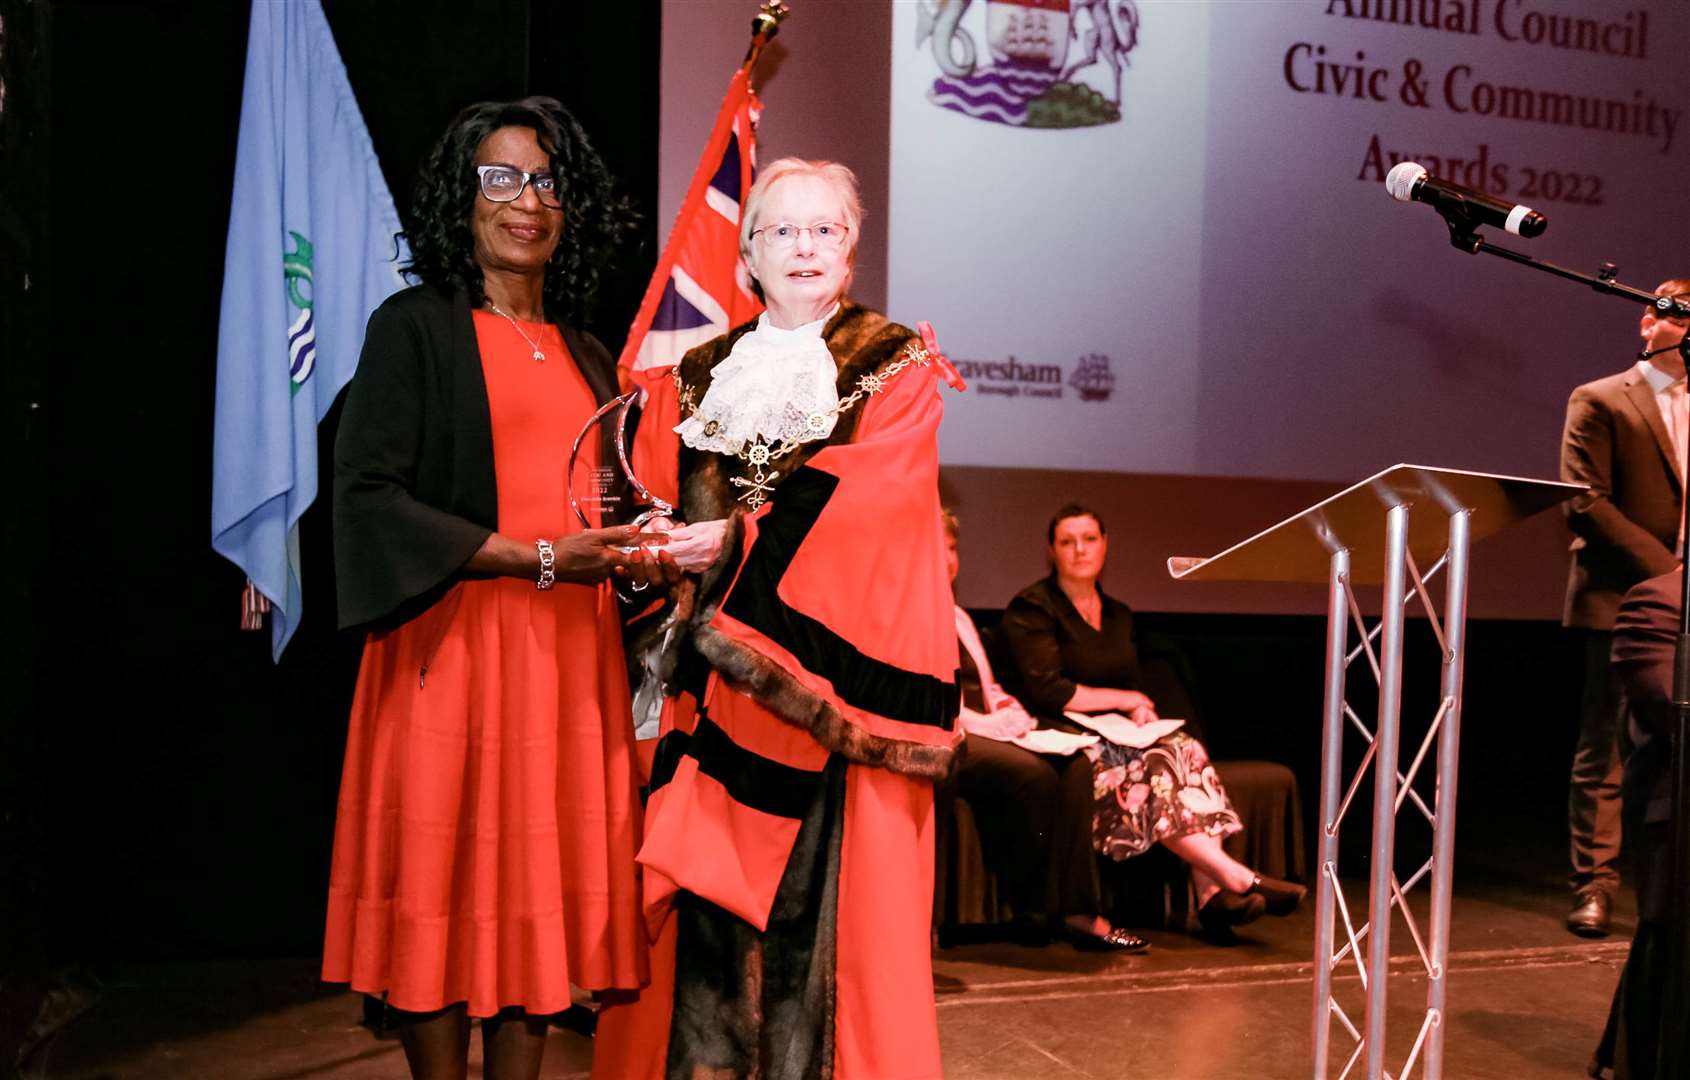 Claudette Bramble, left, receives her award from Mayor of Gravesham, Cllr Lyn Milner. Photo: Gravesham council